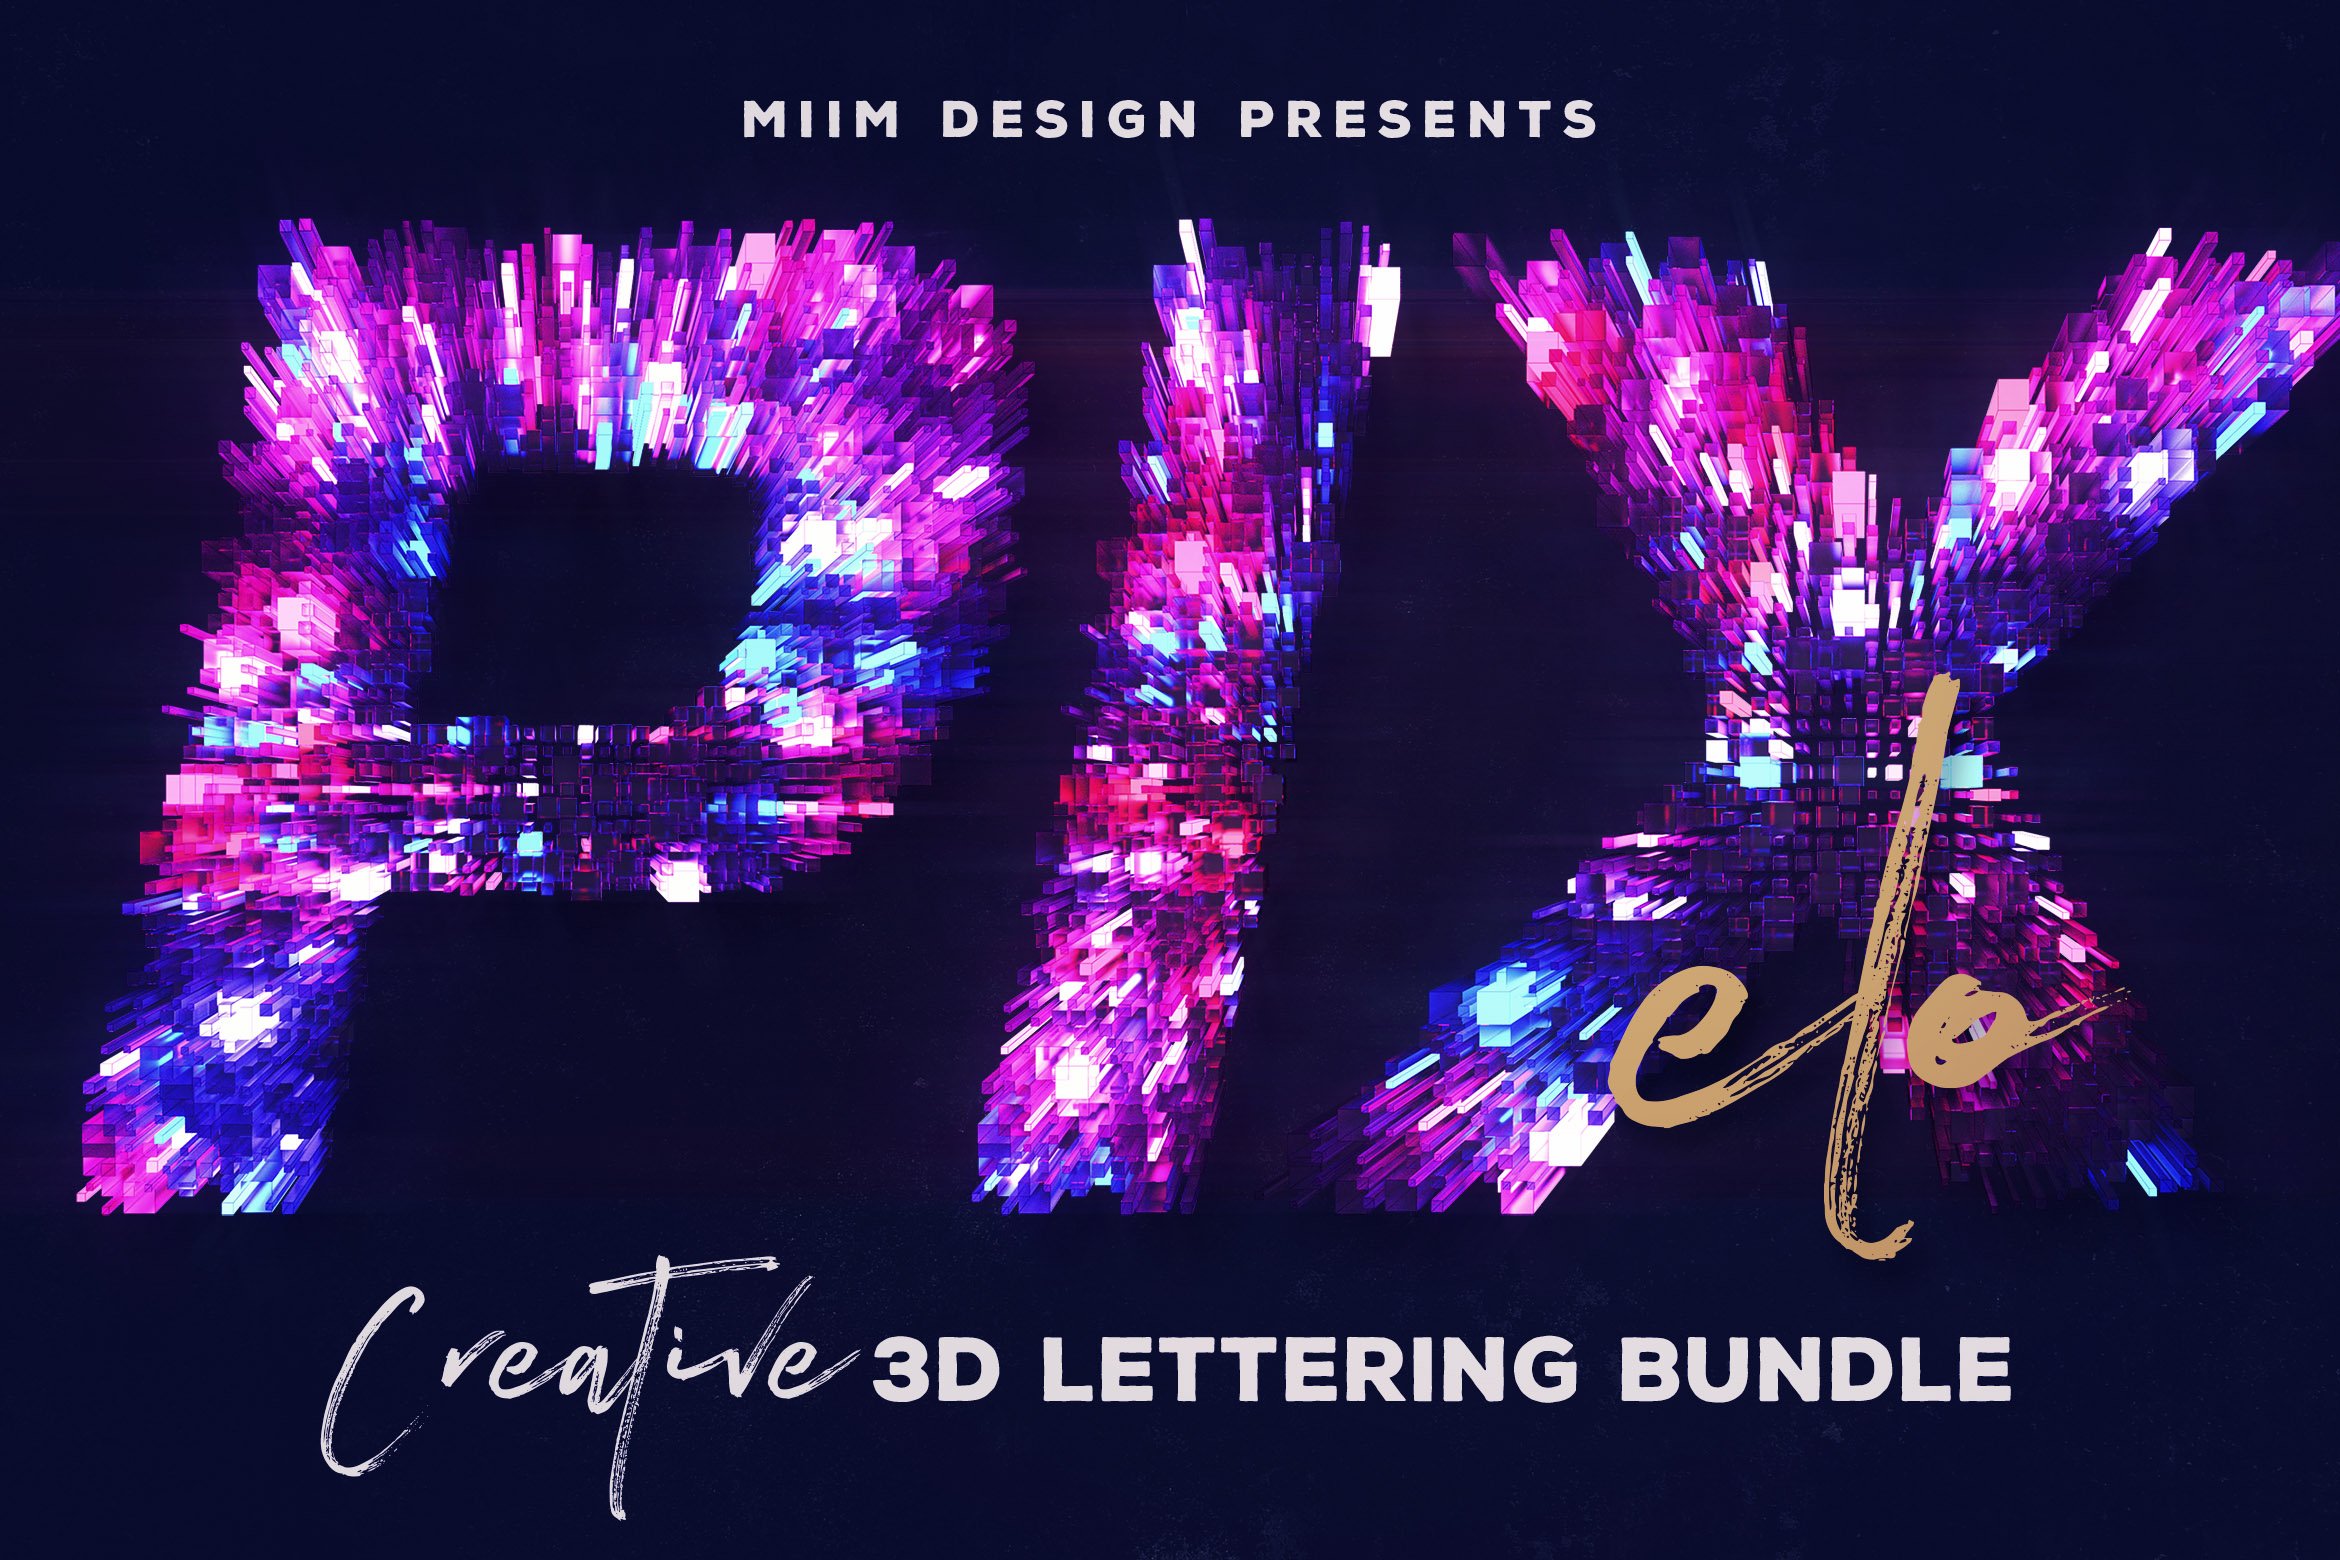 Pixelo – 3D Lettering cover image.